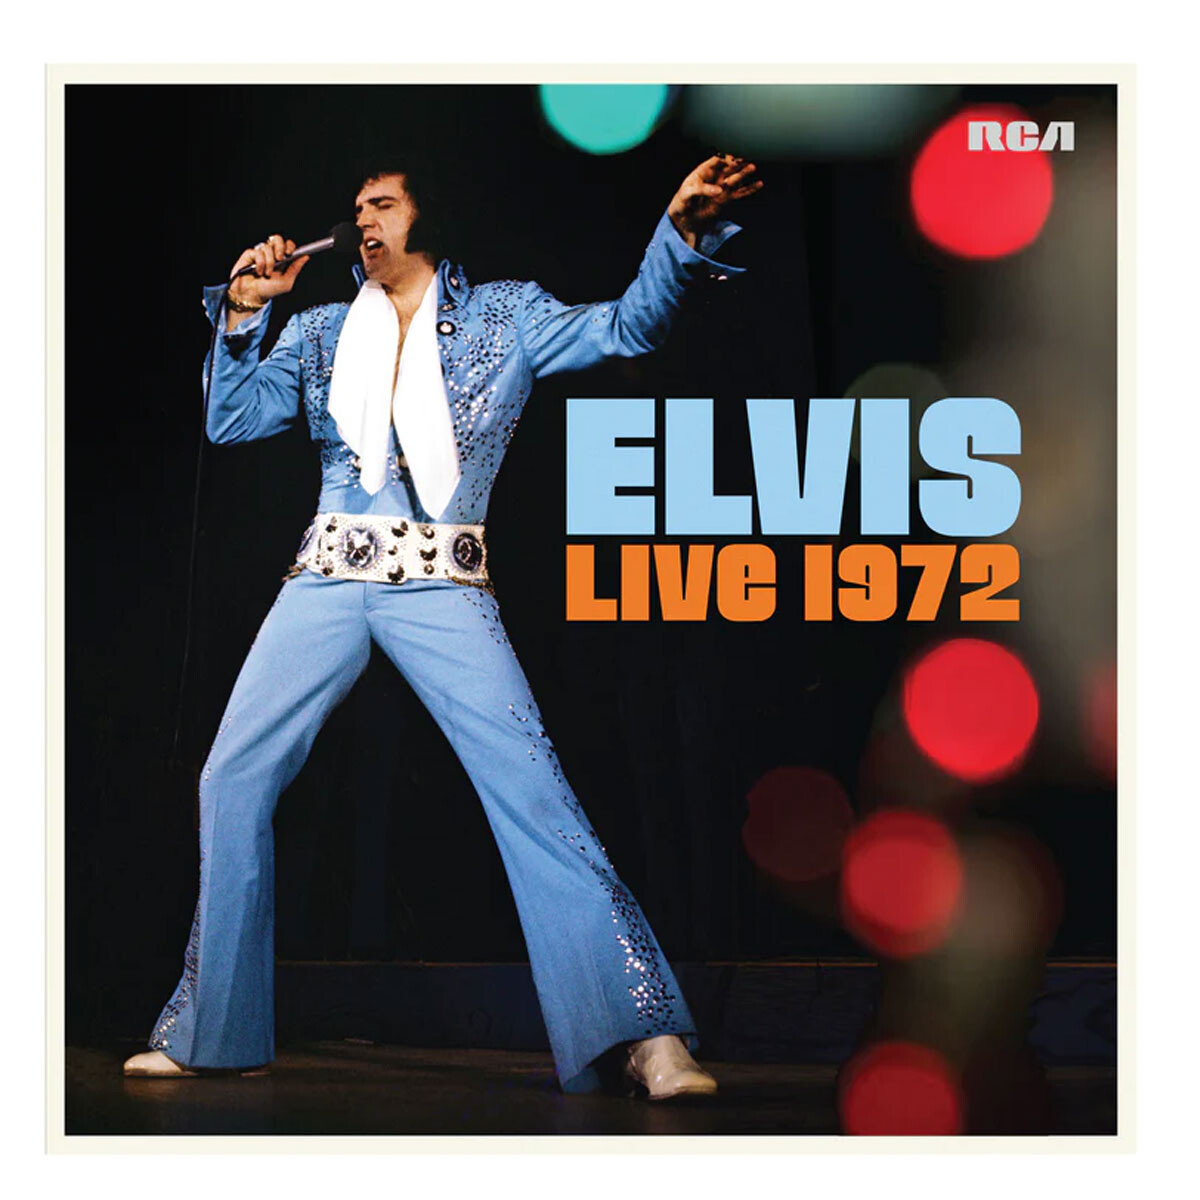 Presley,elvis / Elvis Live 1972 - Vinilo 